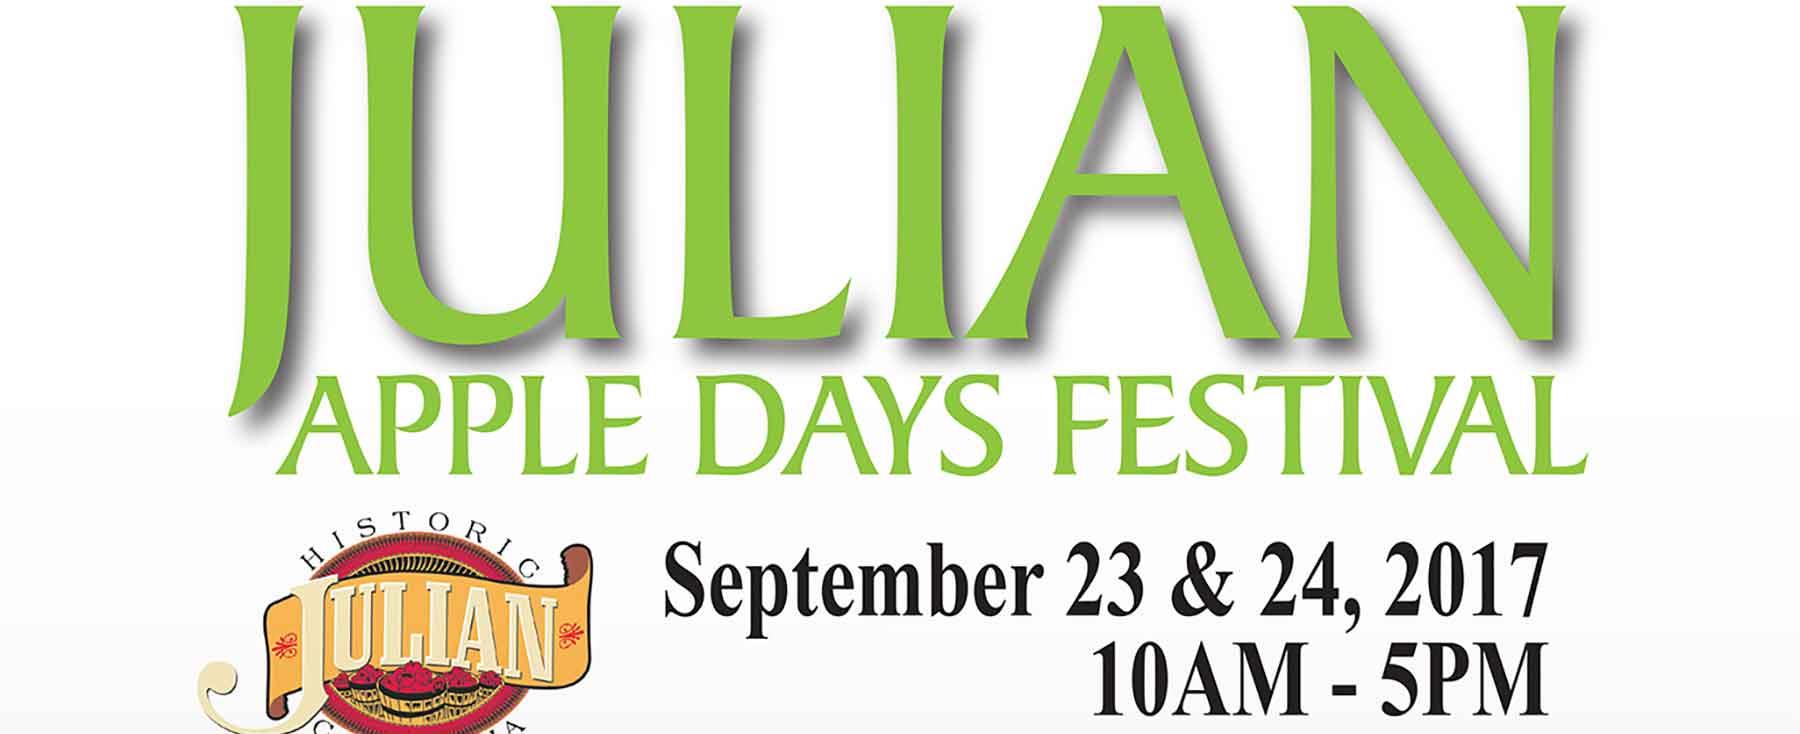 Julian Apple Days Festival